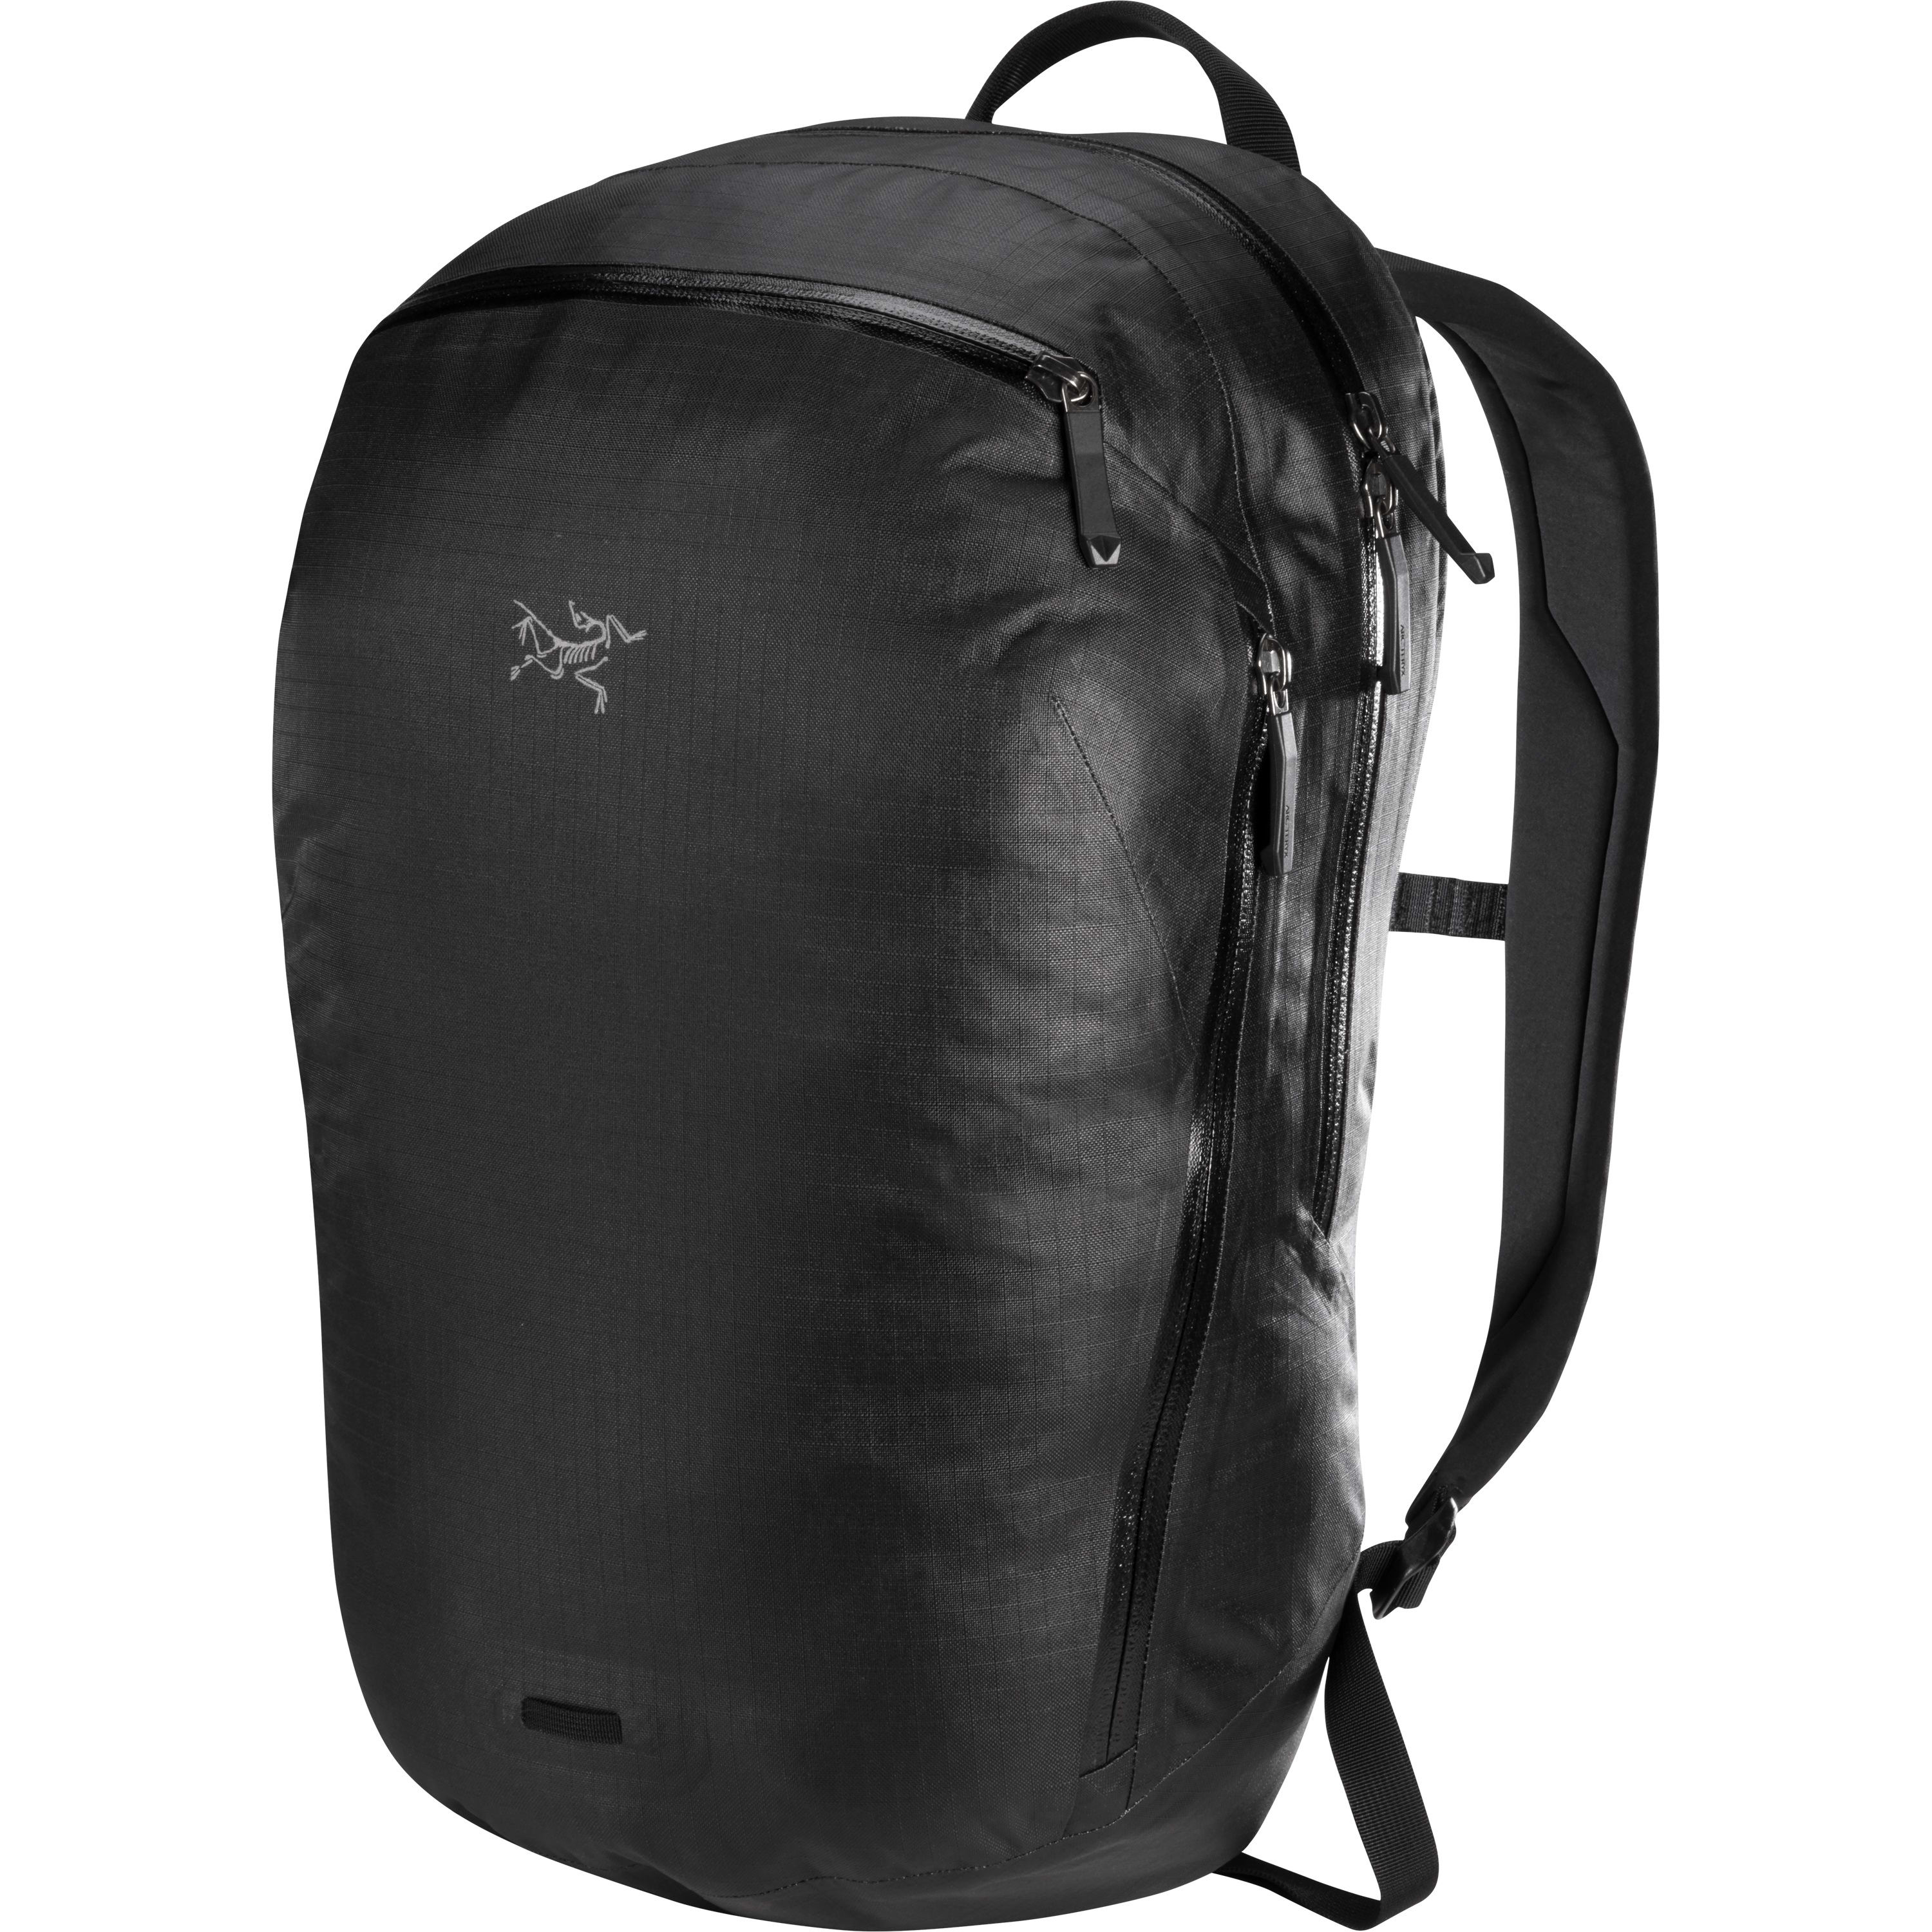 Kauf Arc'teryx Granville Zip 16 Backpack bei Outnorth